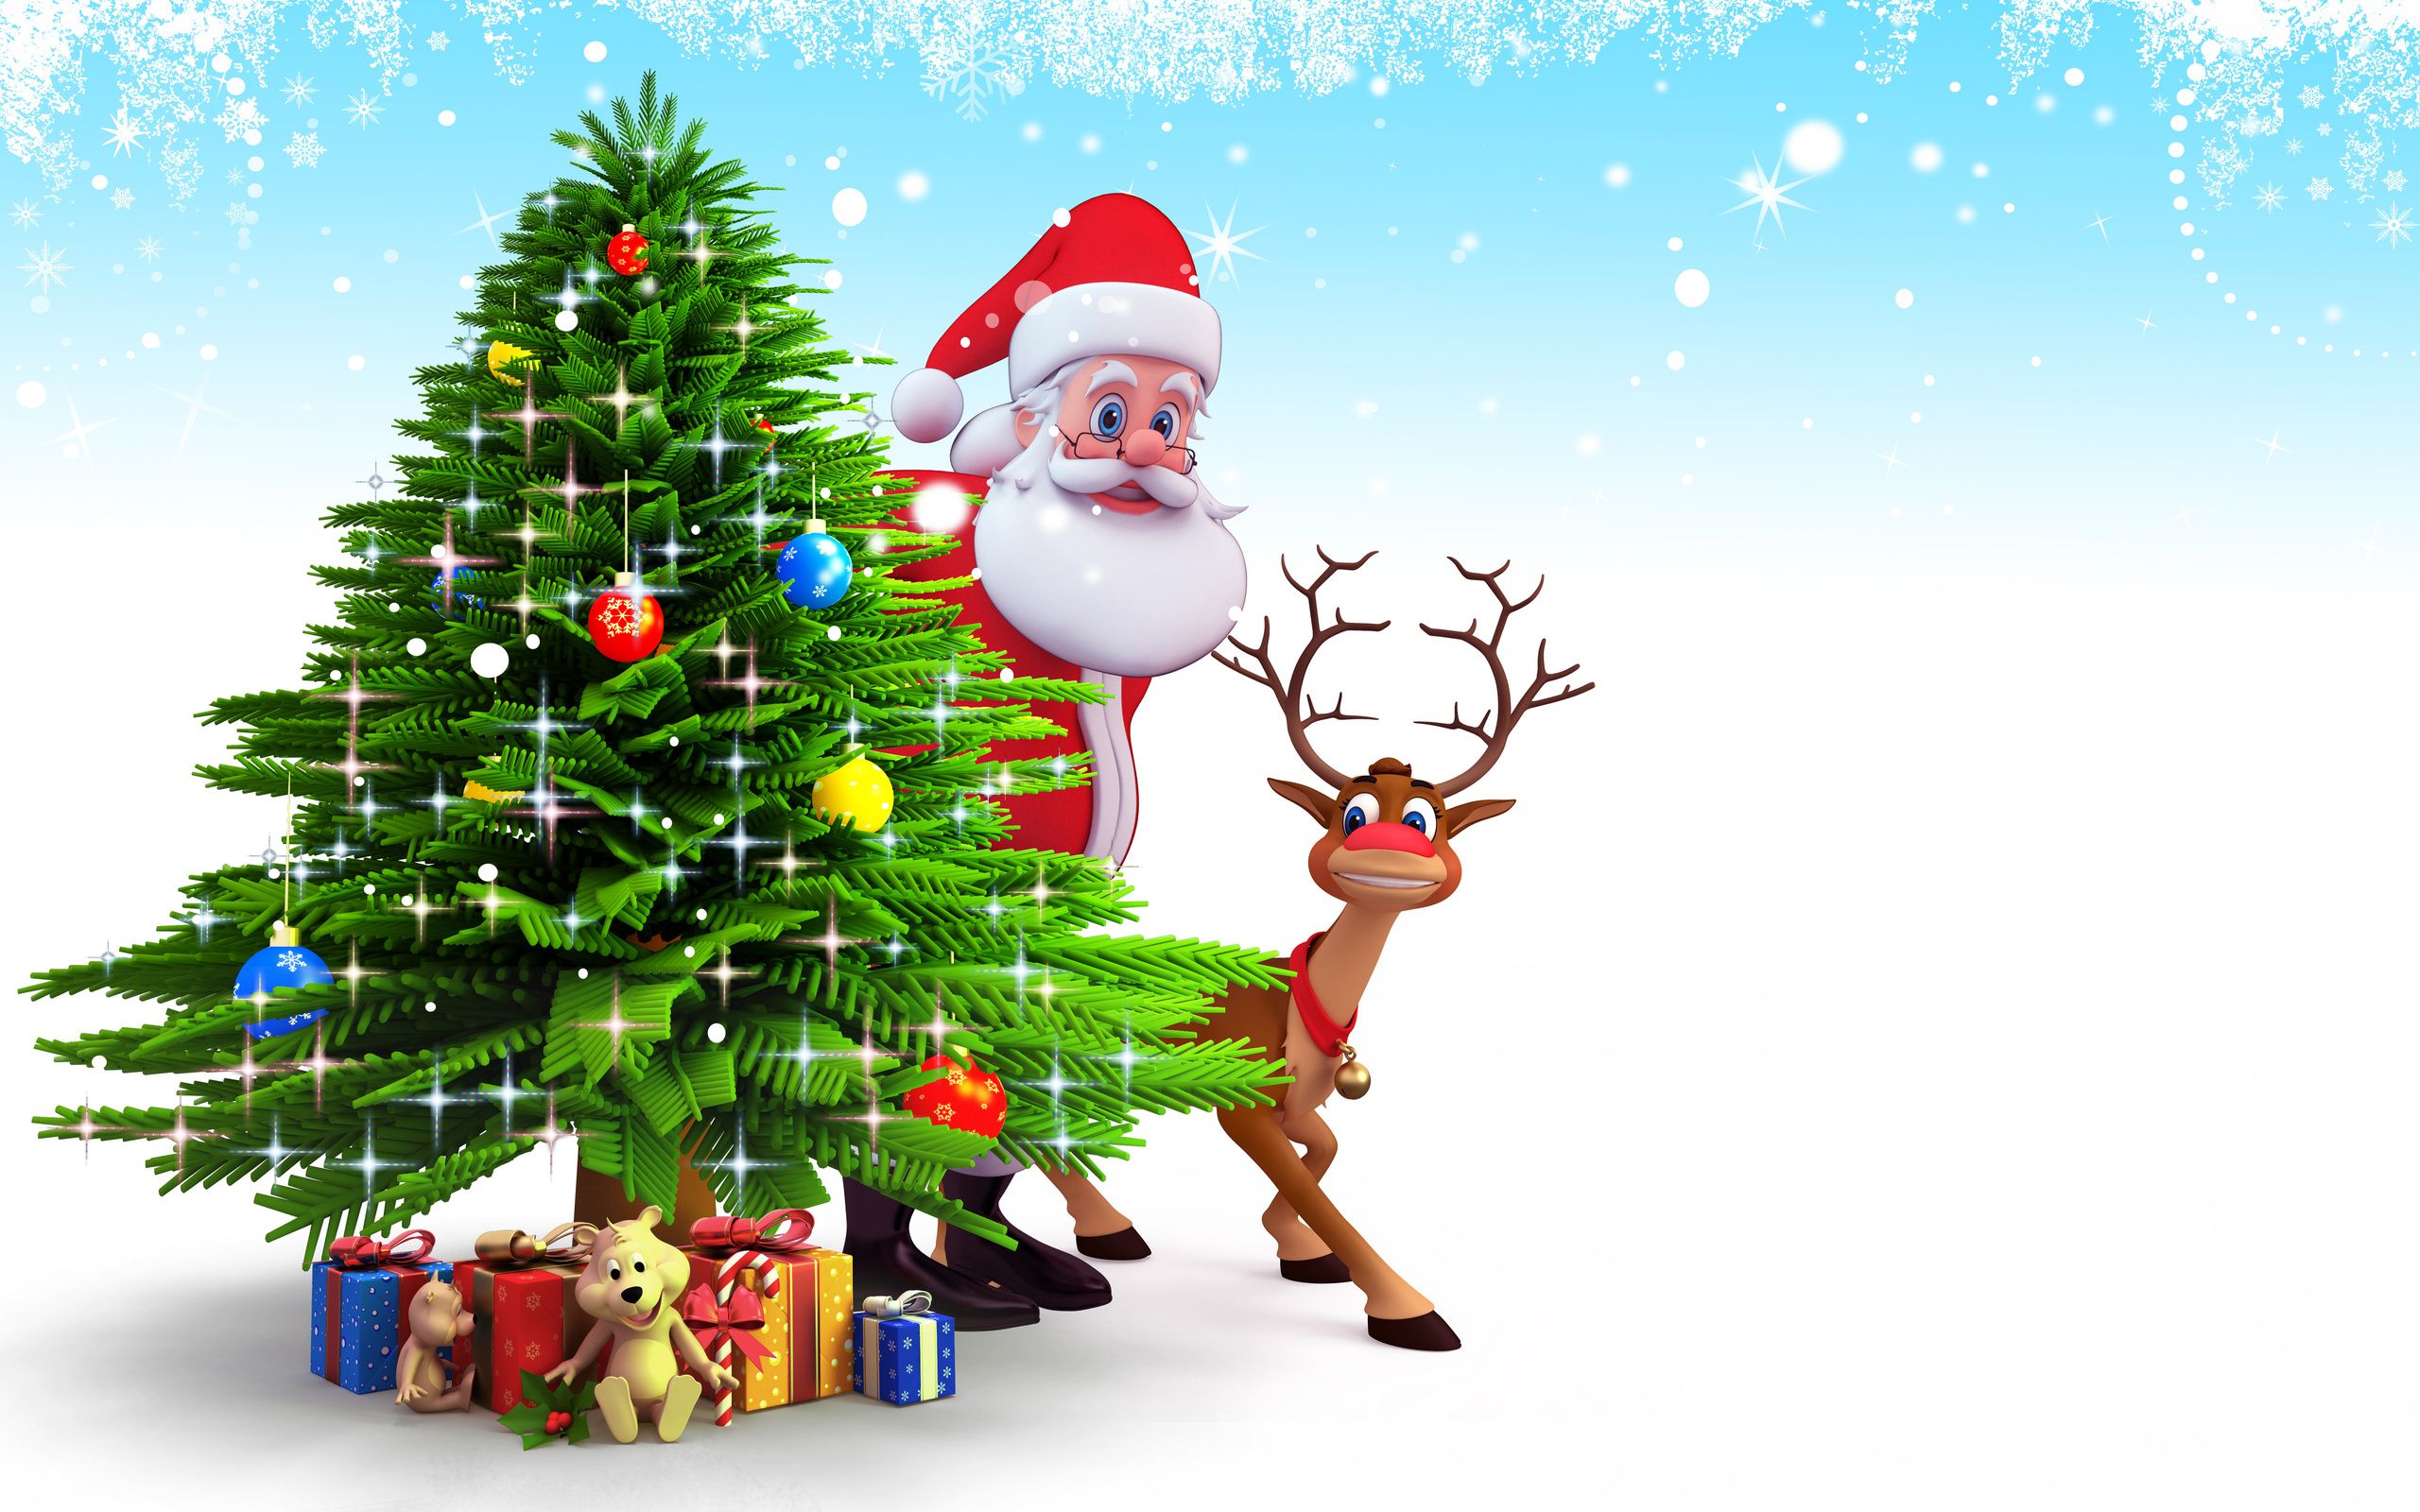 Santa Claus And Reindeer Behind Christmas Tree Gifts